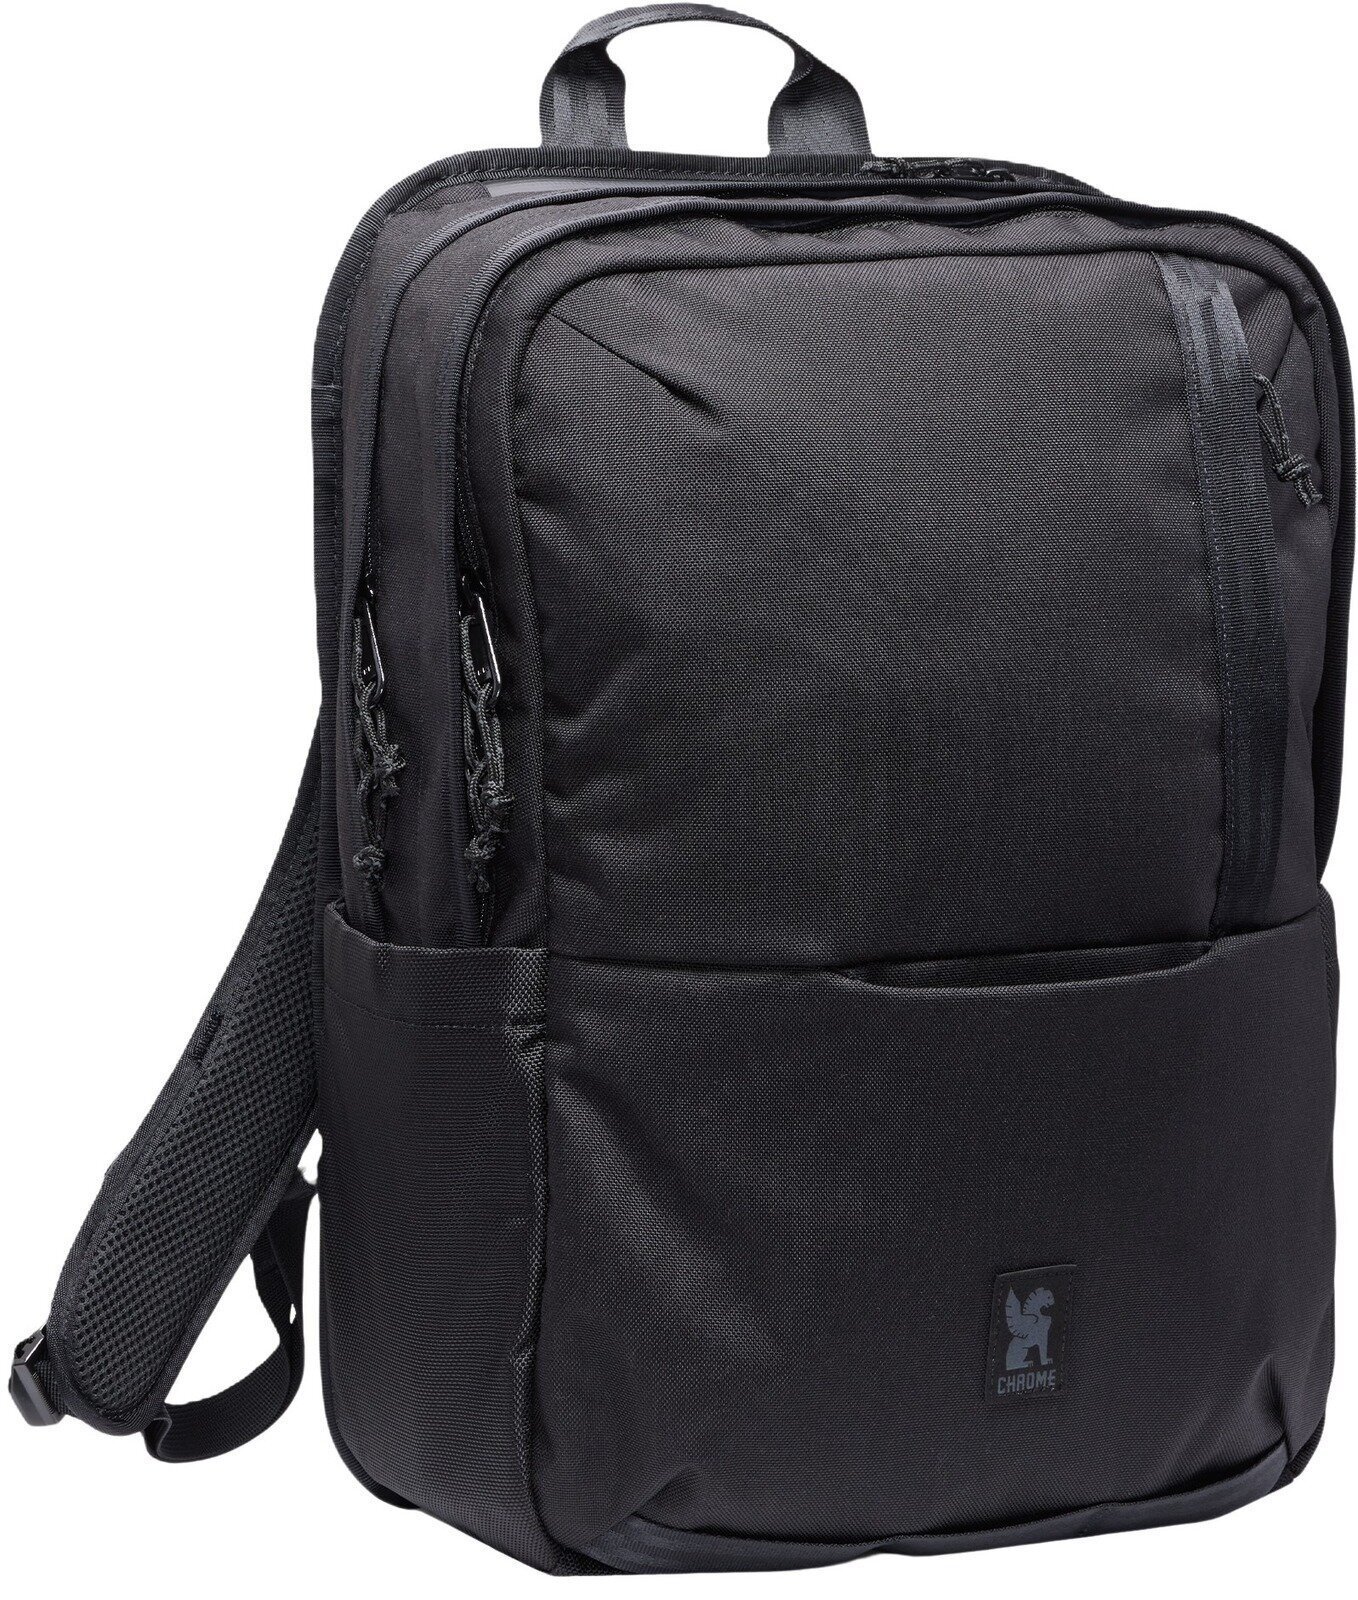 Lifestyle batoh / Taška Chrome Hawes Backpack Black 26 L Batoh